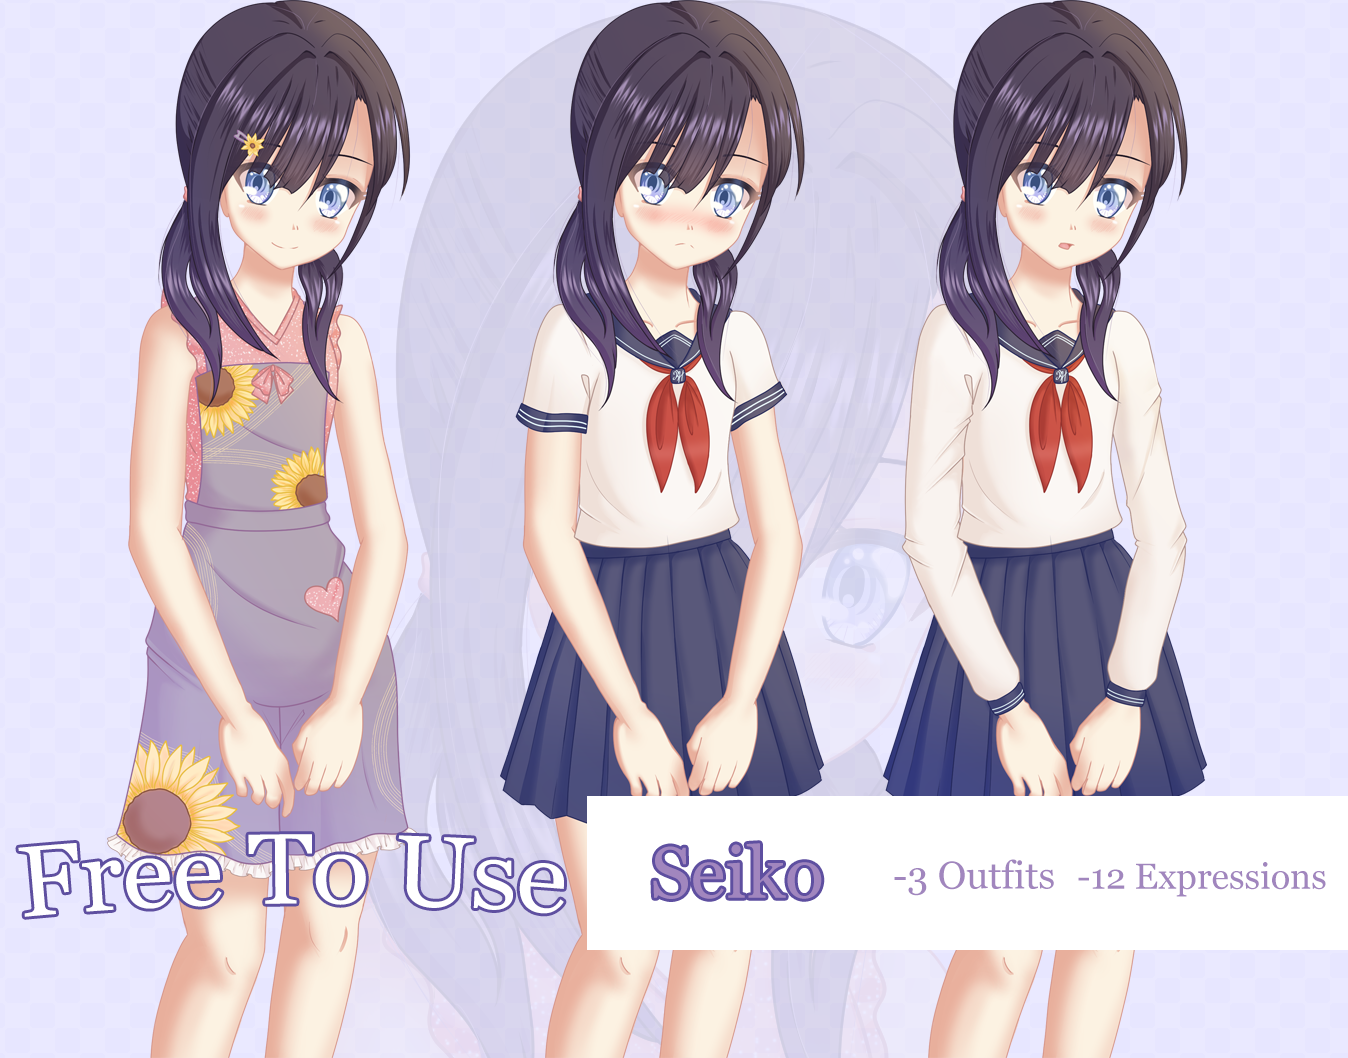 Seiko- Anime Child Sprite Released! - Seiko - Free Character Sprite by  NoranekoGames